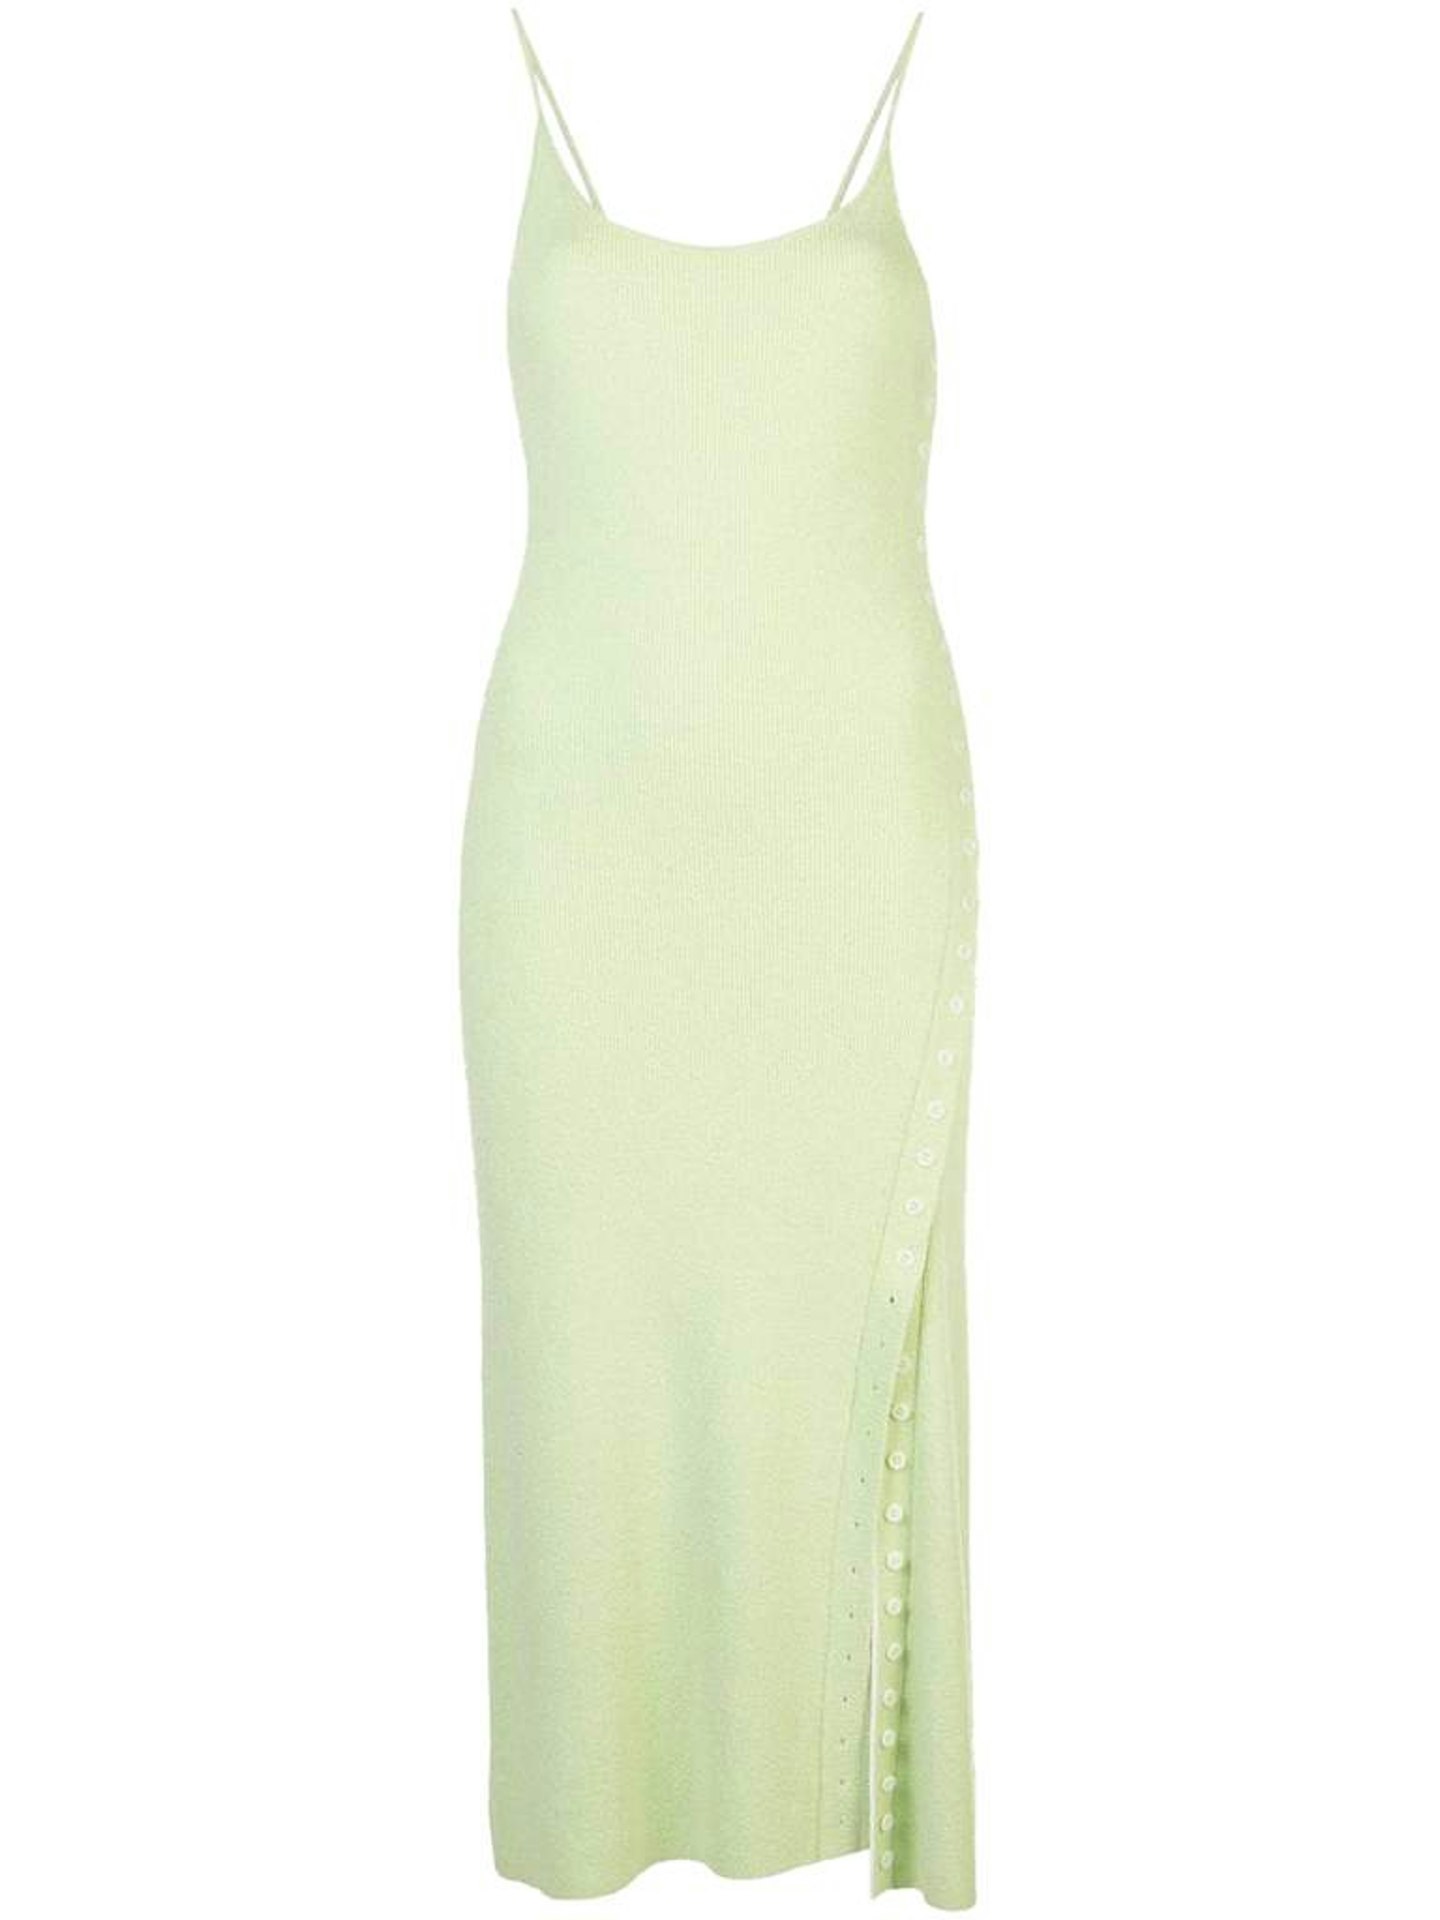 Proenza Schouler White Label, long buttoned up dress, £390